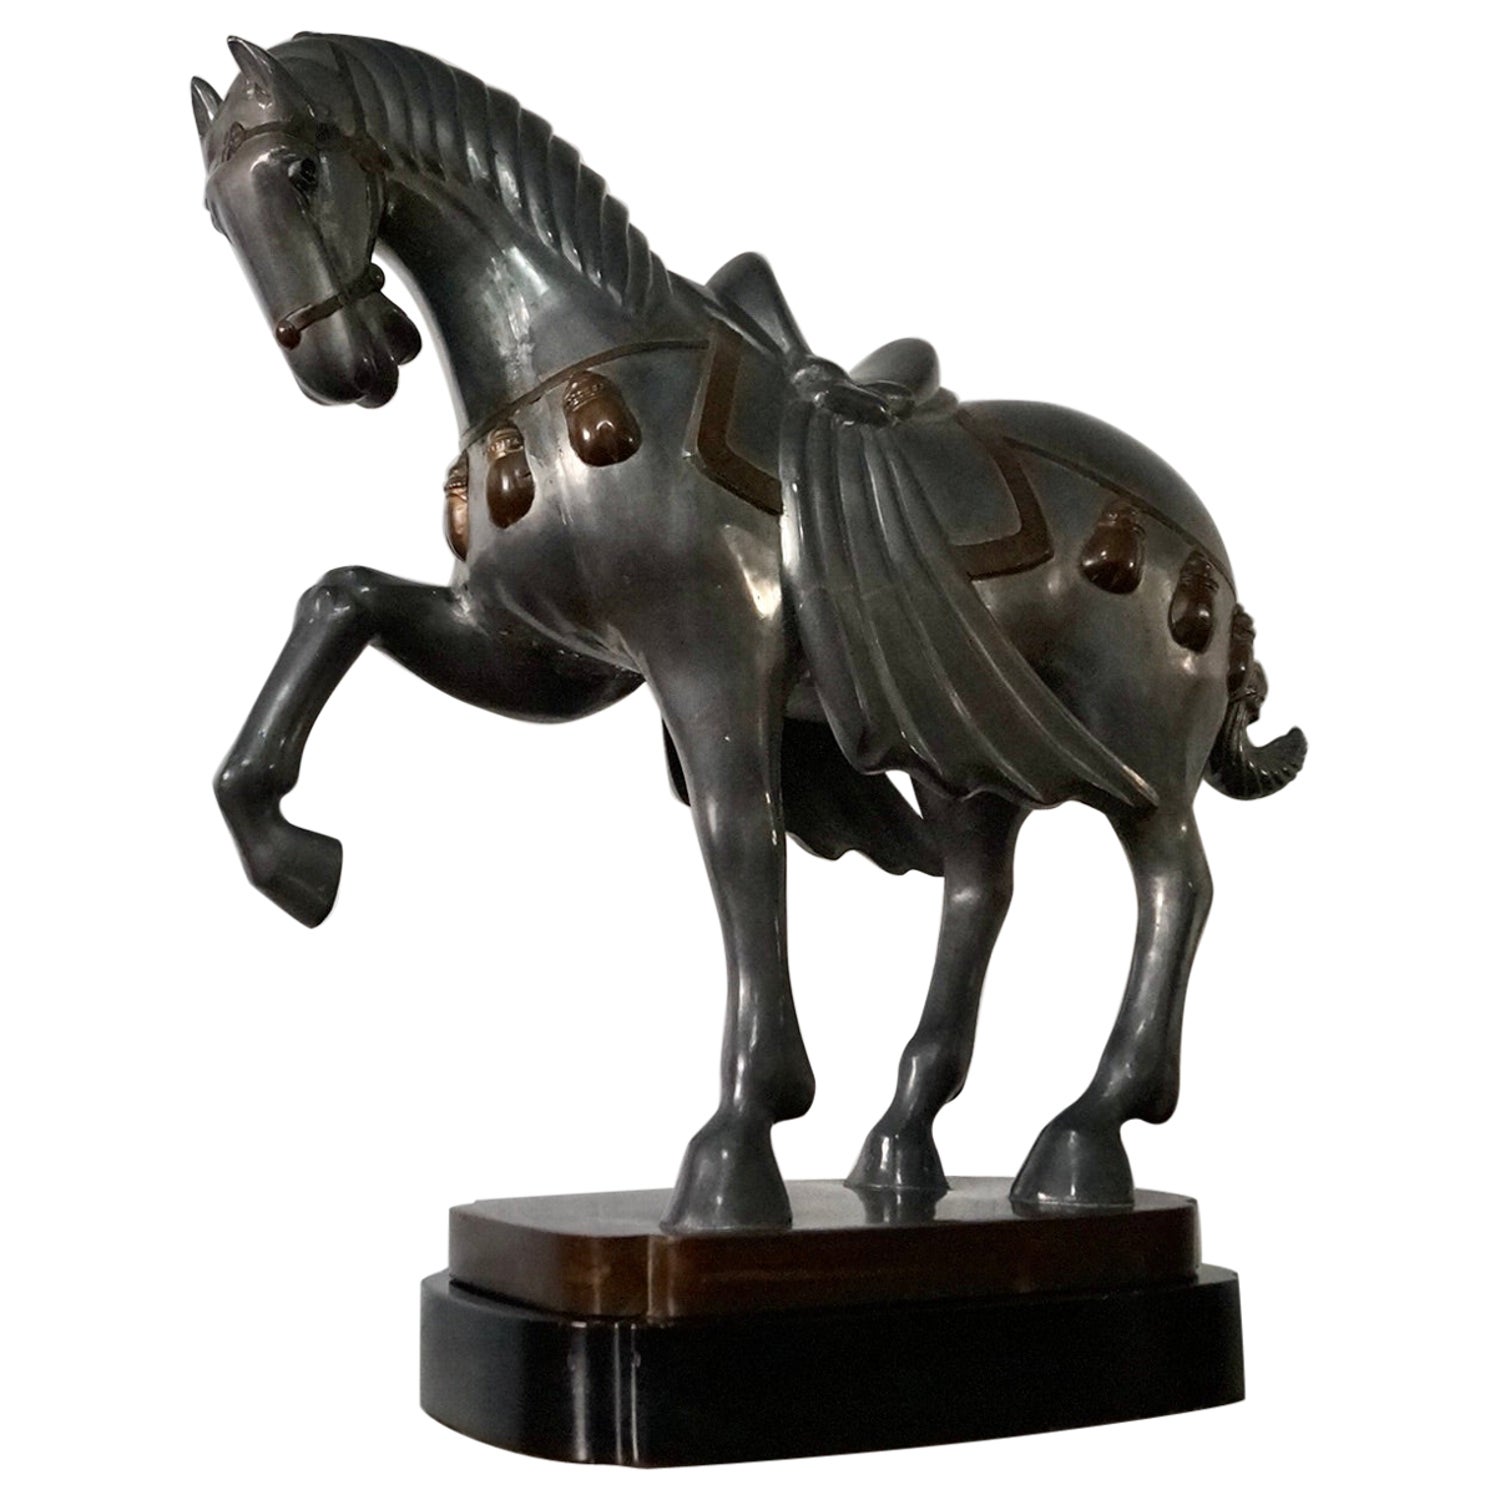 Vintage Brass Horse Statue - 6 For Sale on 1stDibs